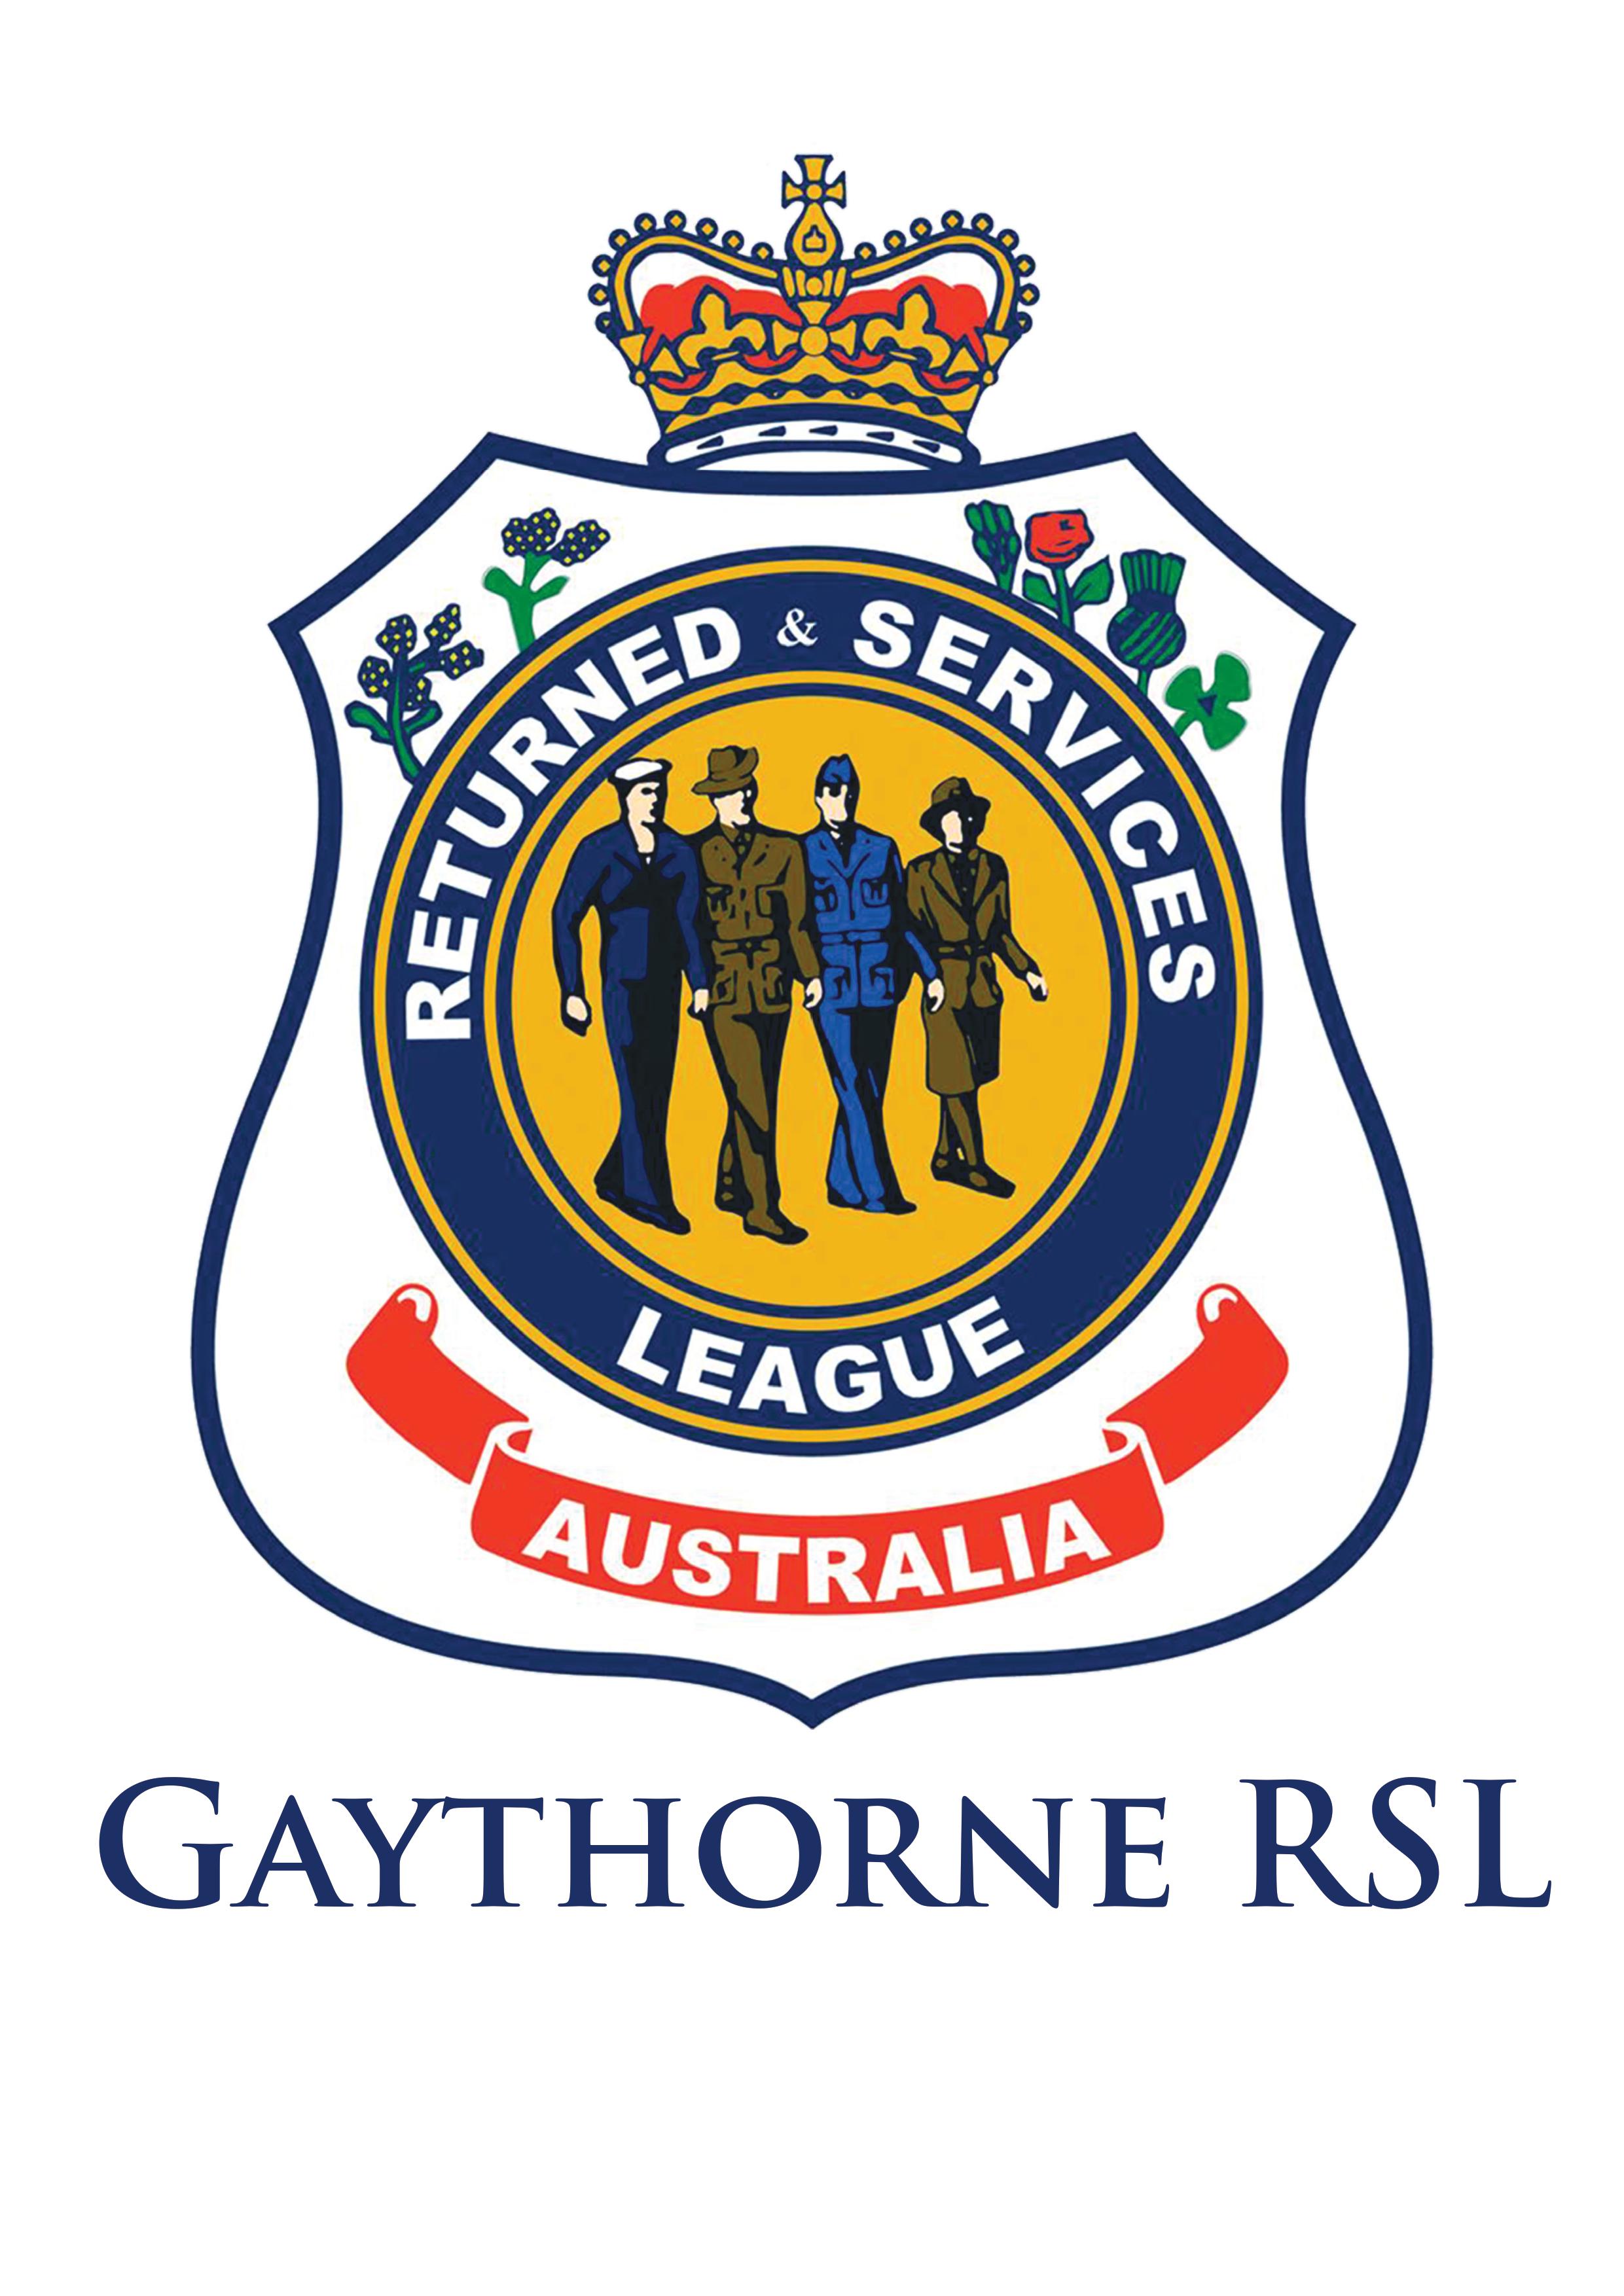 Gaythorne RSL logo.jpg